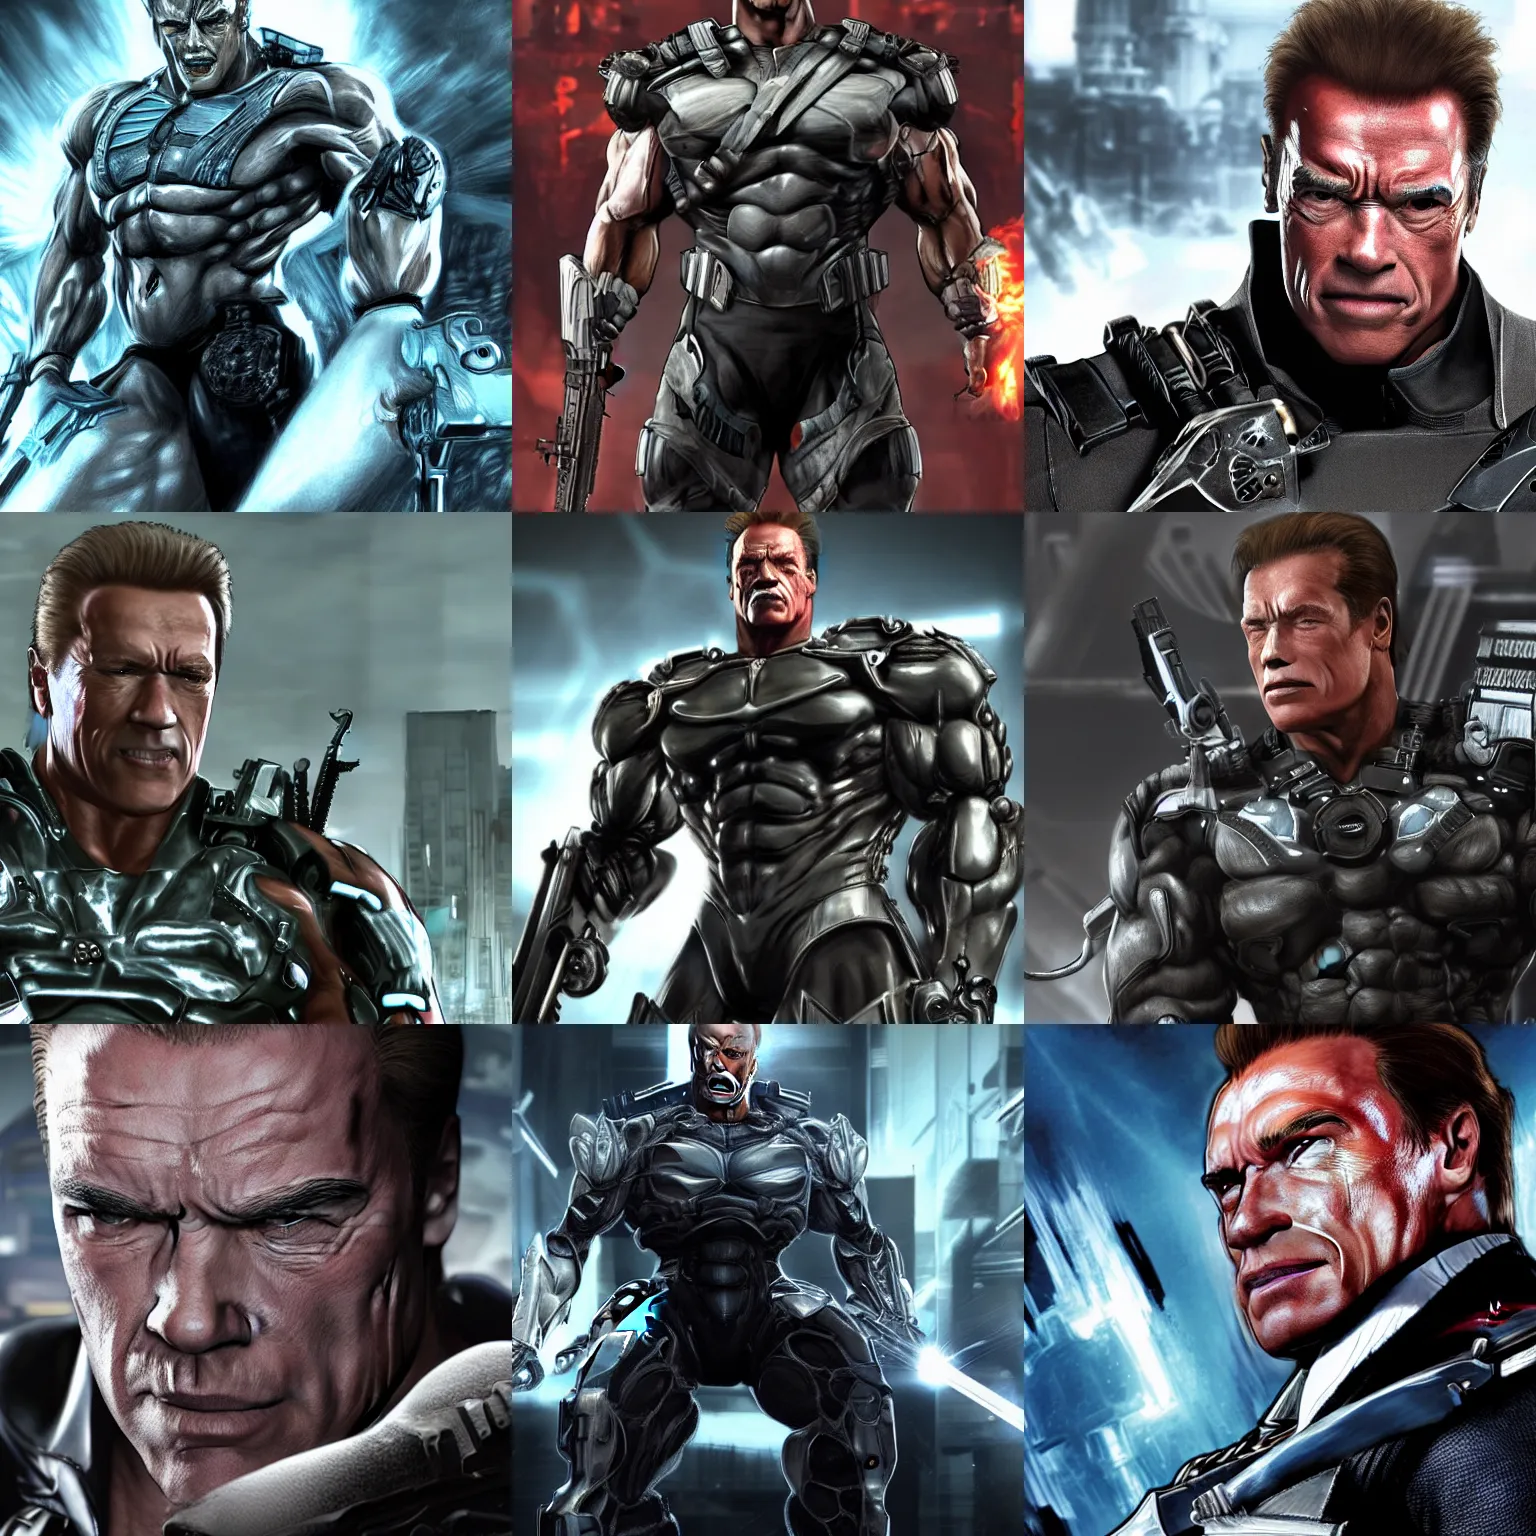 Prompt: Arnold Schwarzenegger as senator armstrong in metal gear rising revengeance